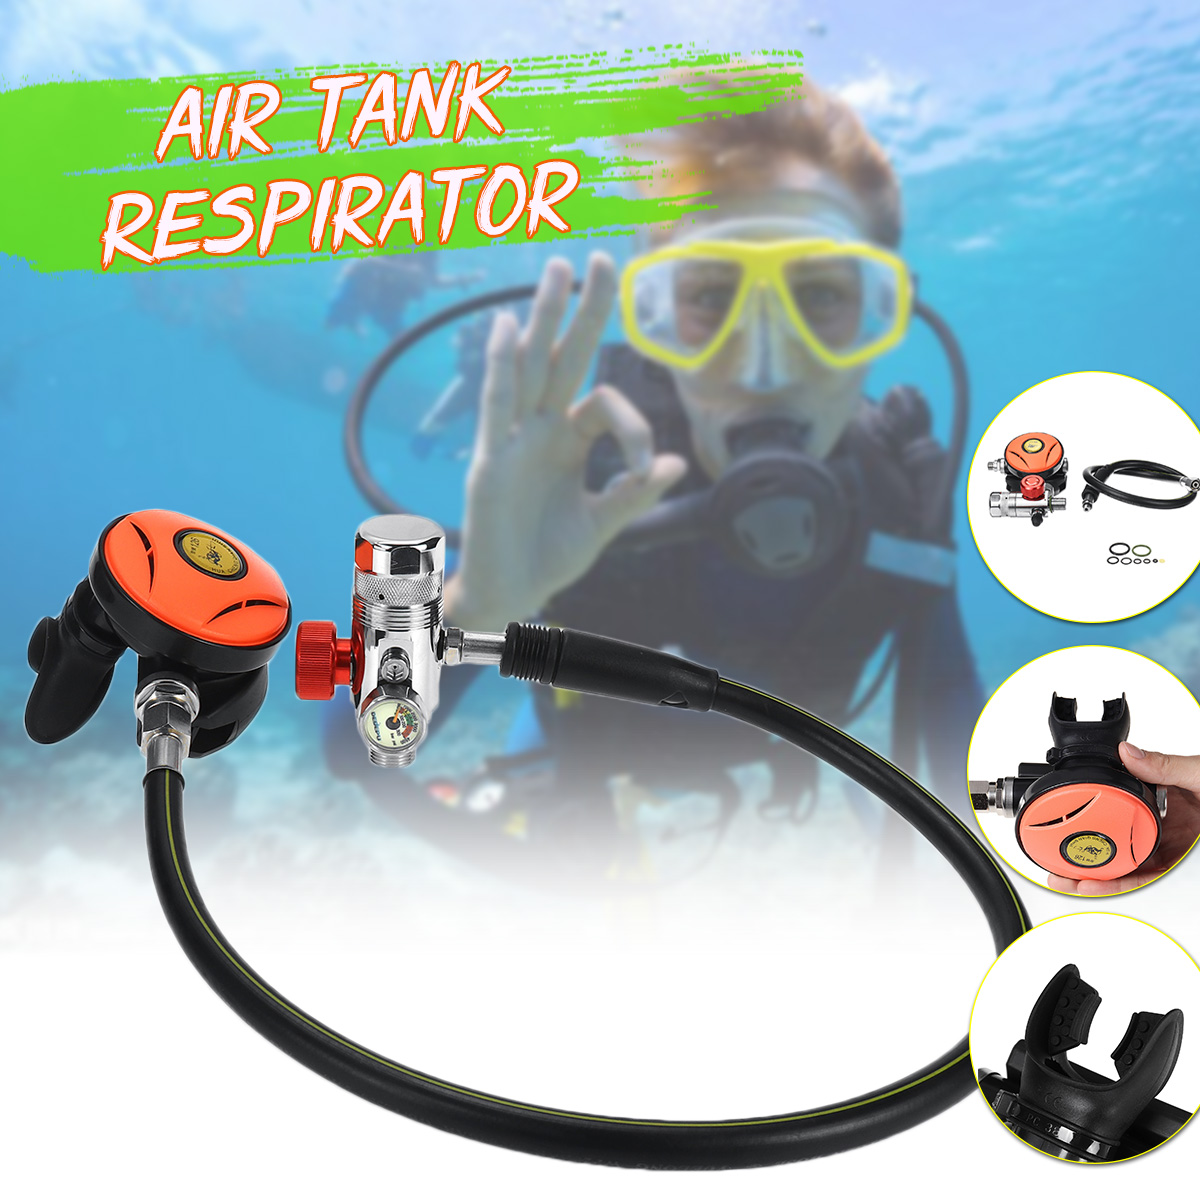 DEDEPU-T_S5000-Diving-Breathing-Valve-Diving-Equipment-Tube-Air-Tank-Respirator-Replacement-Kit-1700900-1